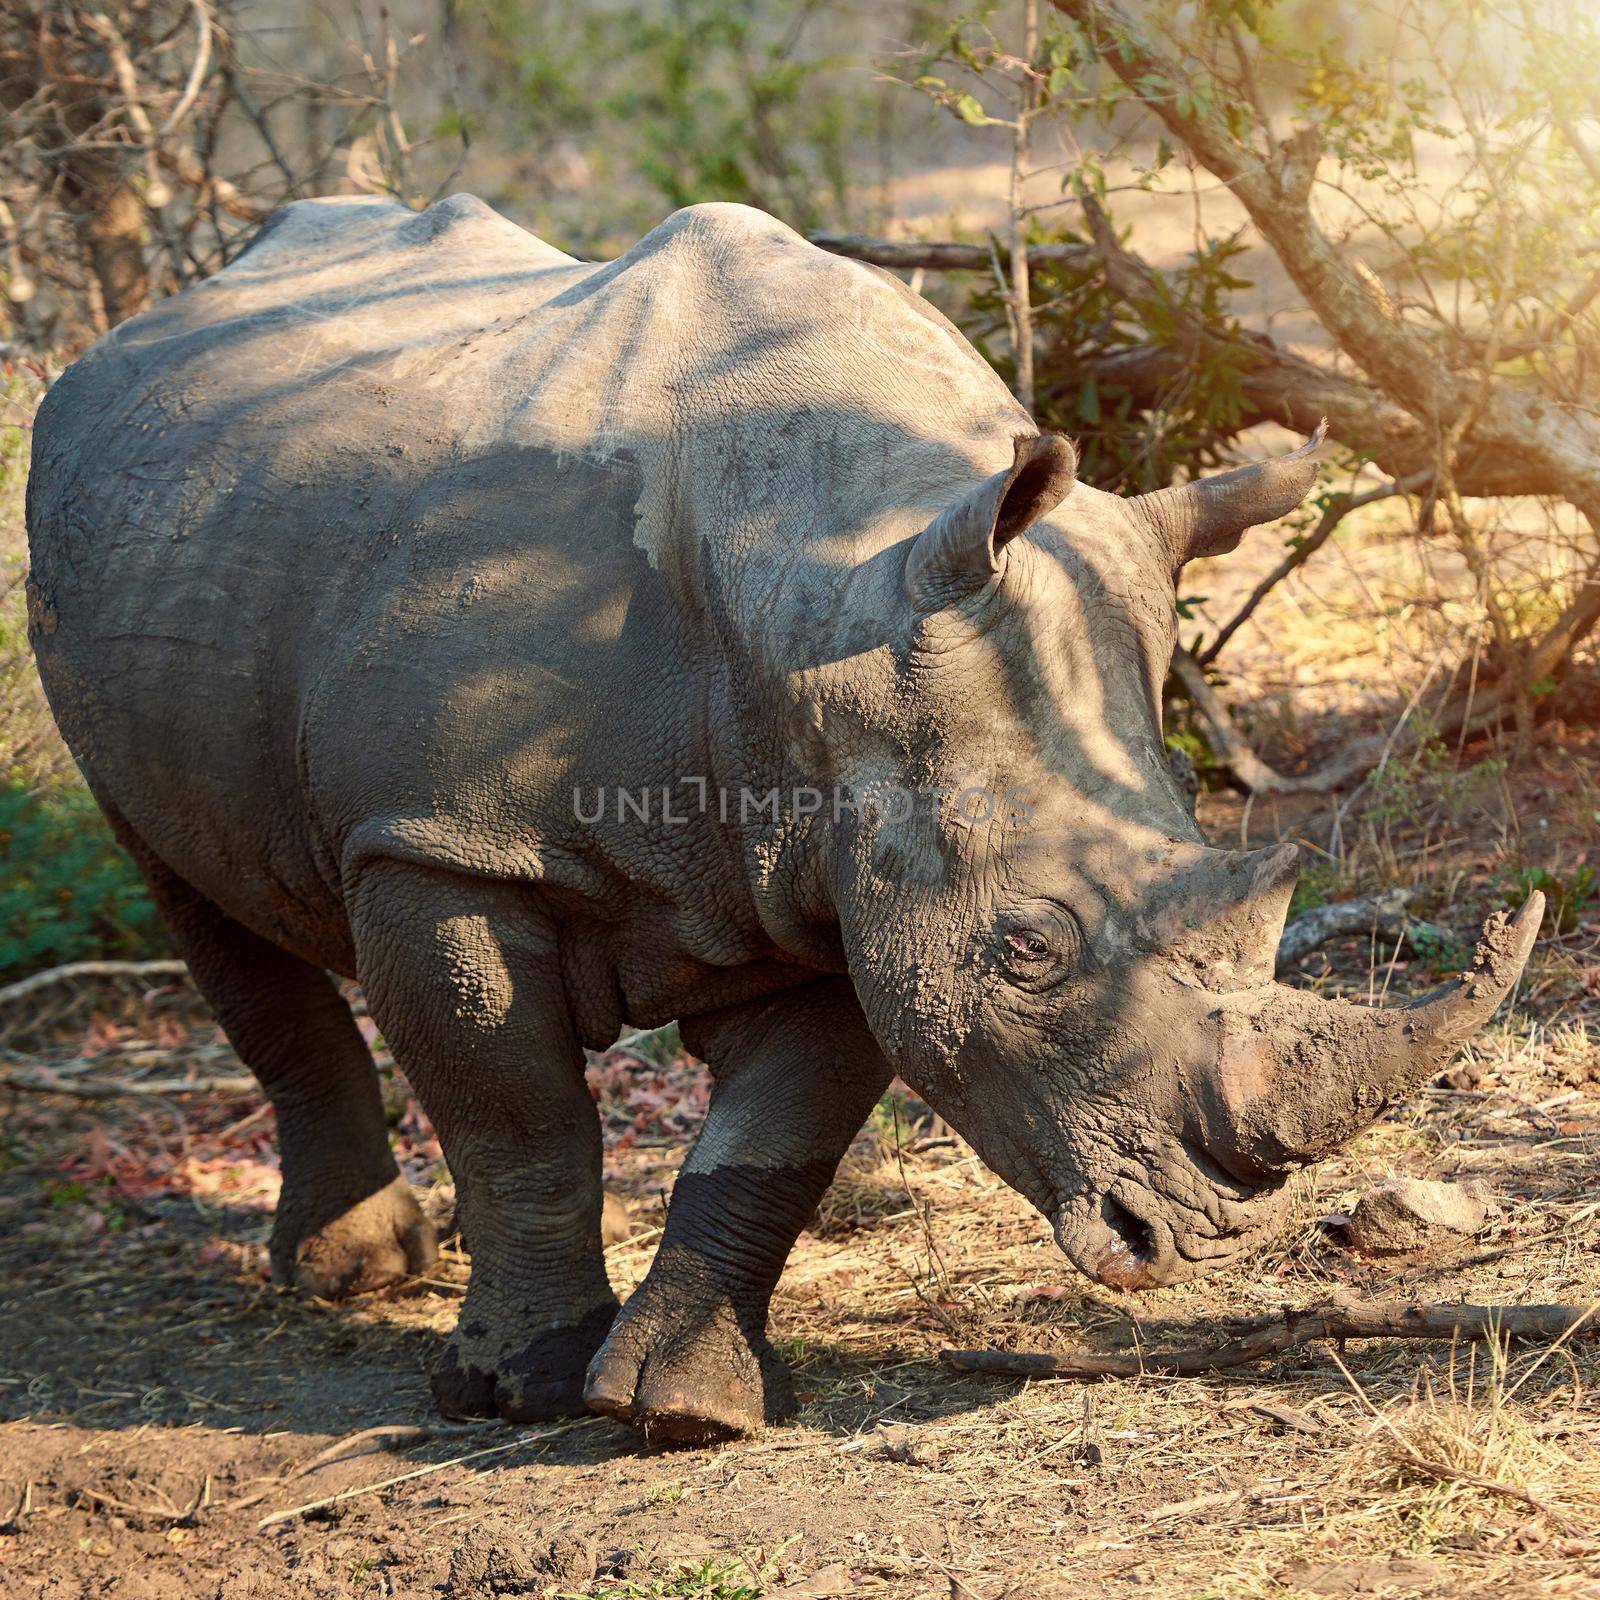 Full length shot of a rhinoceros in the wild.